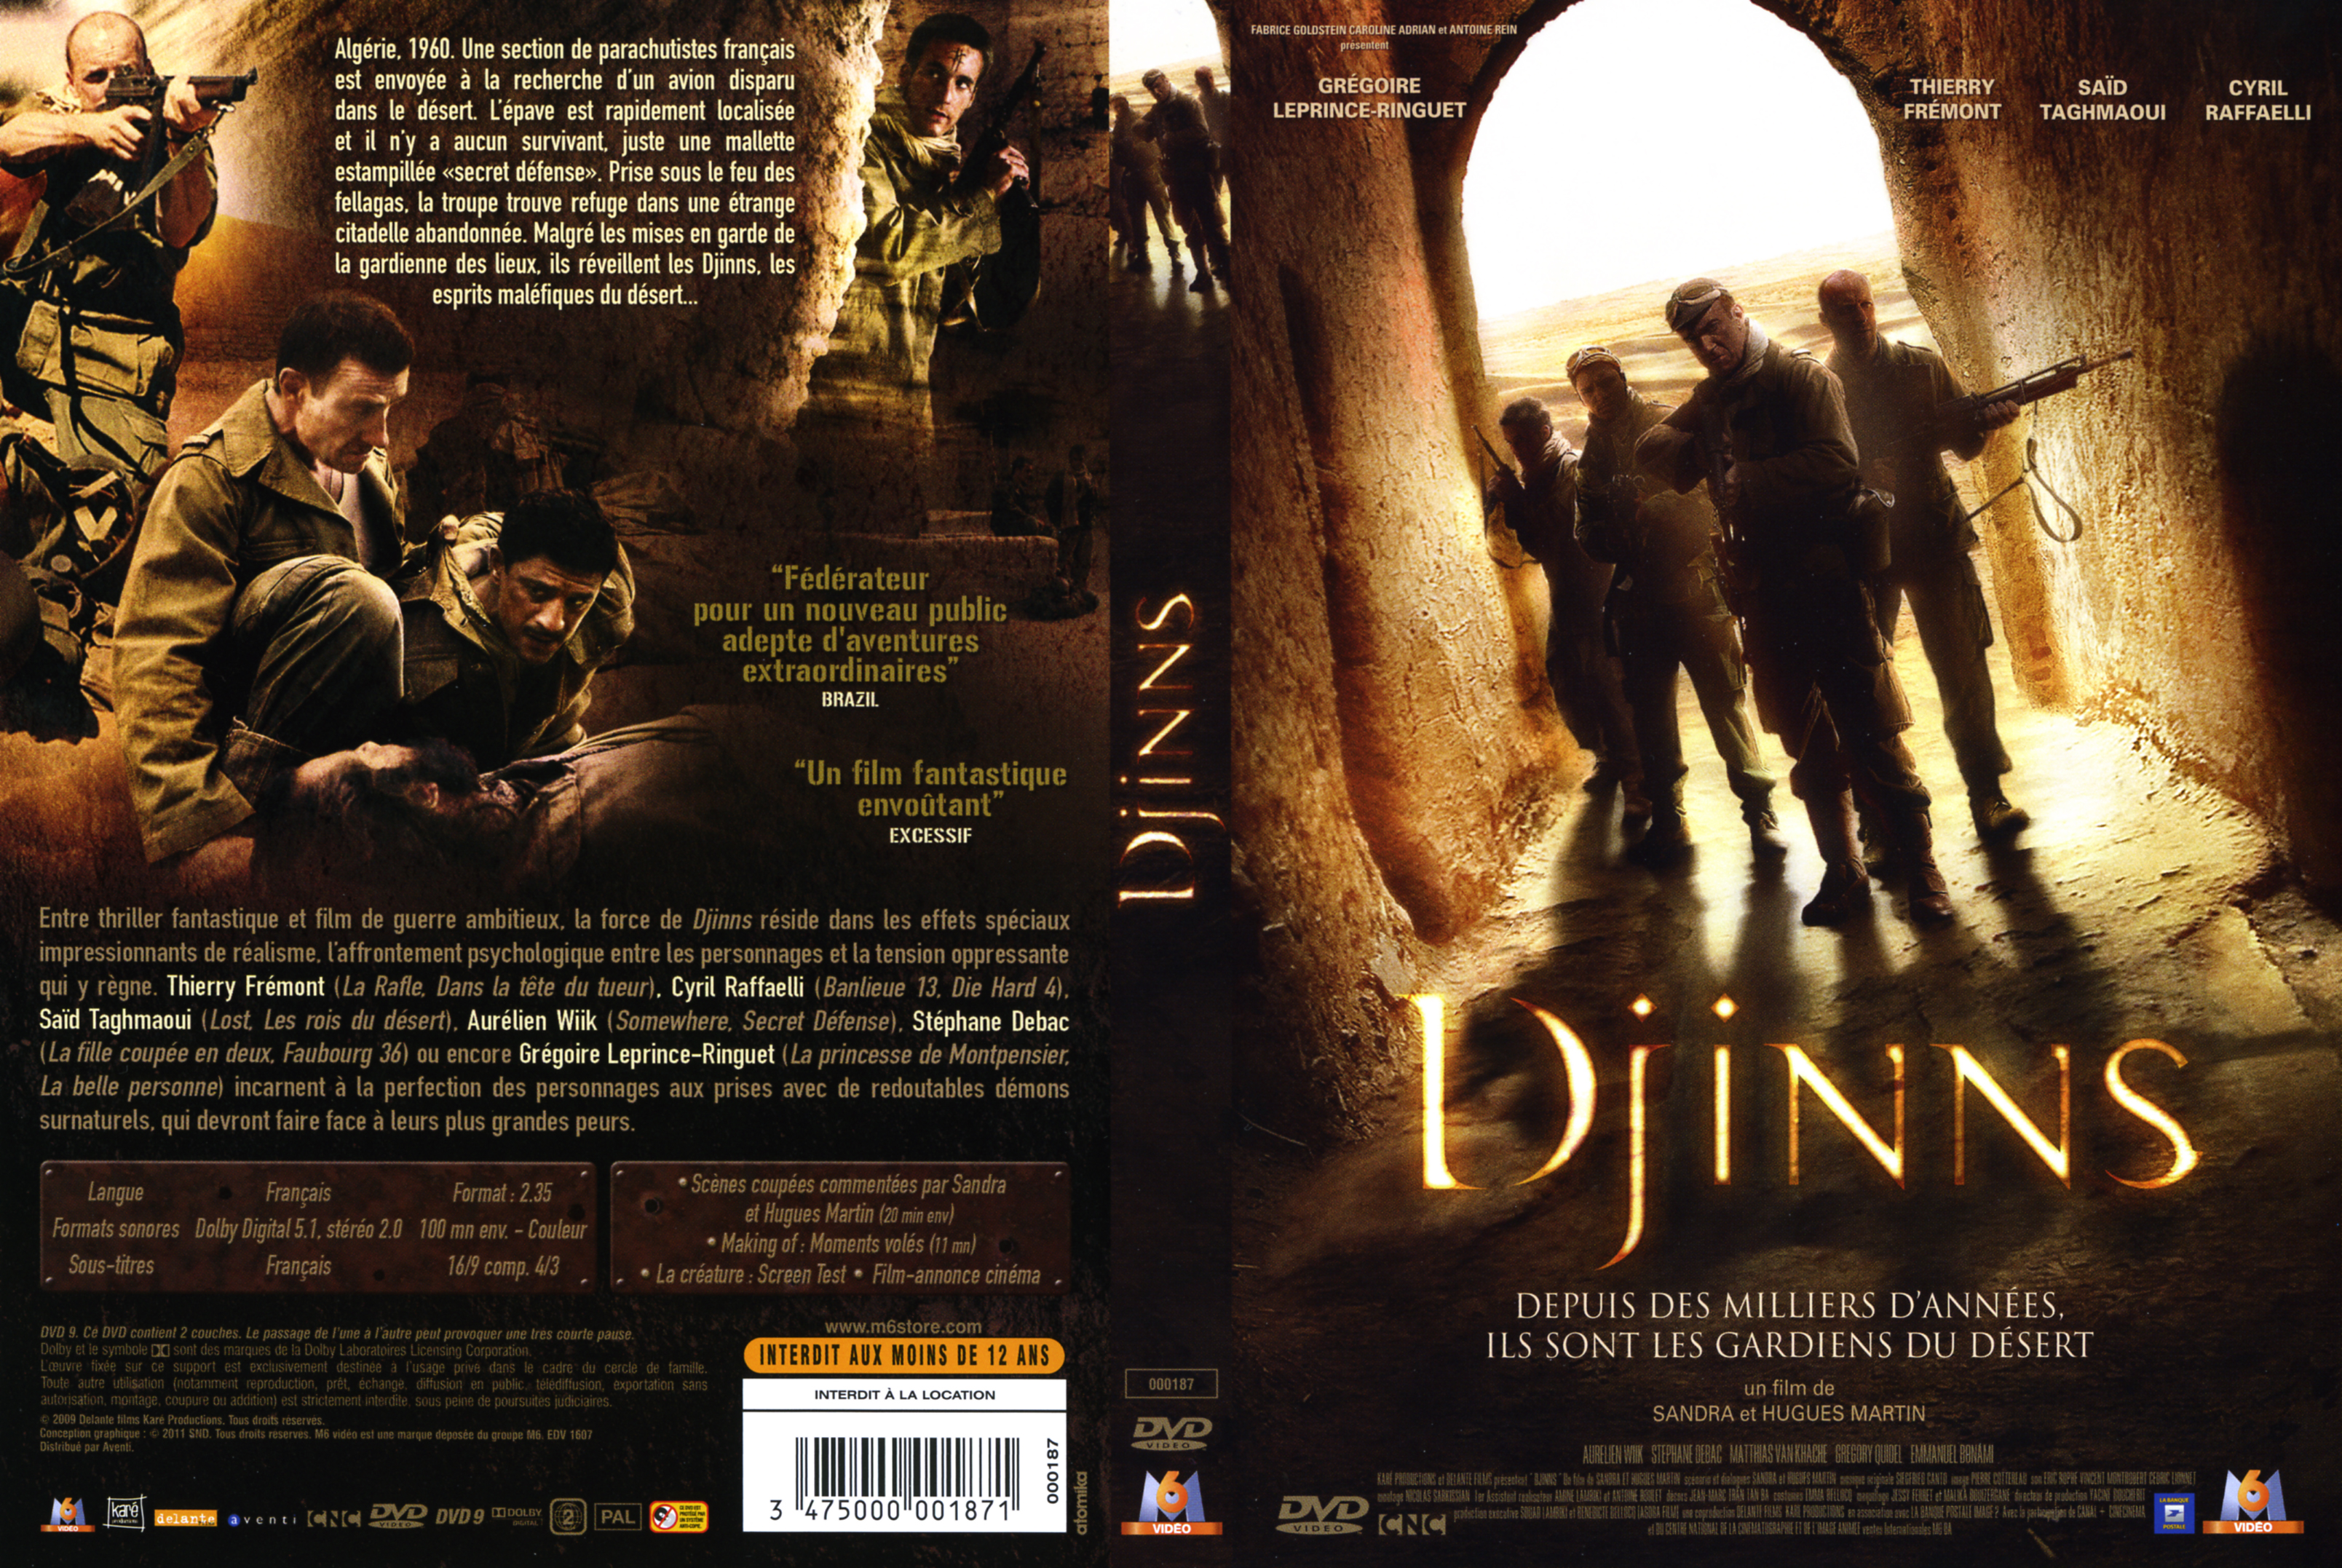 Jaquette DVD Djinns v2